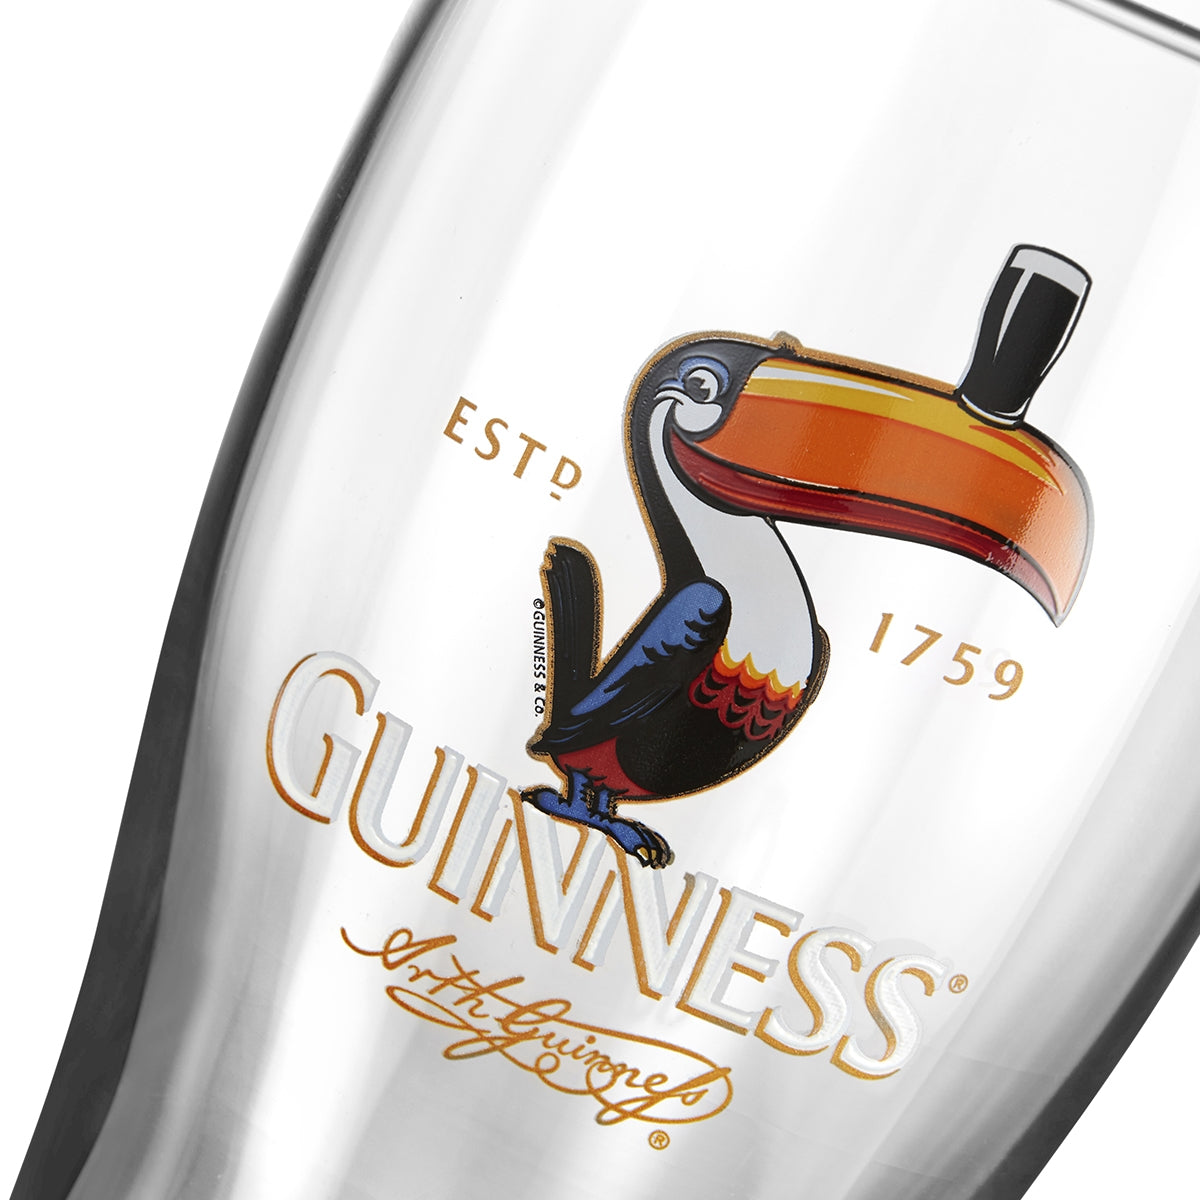 Guinness Toucan Pint Glass - 4 Pack